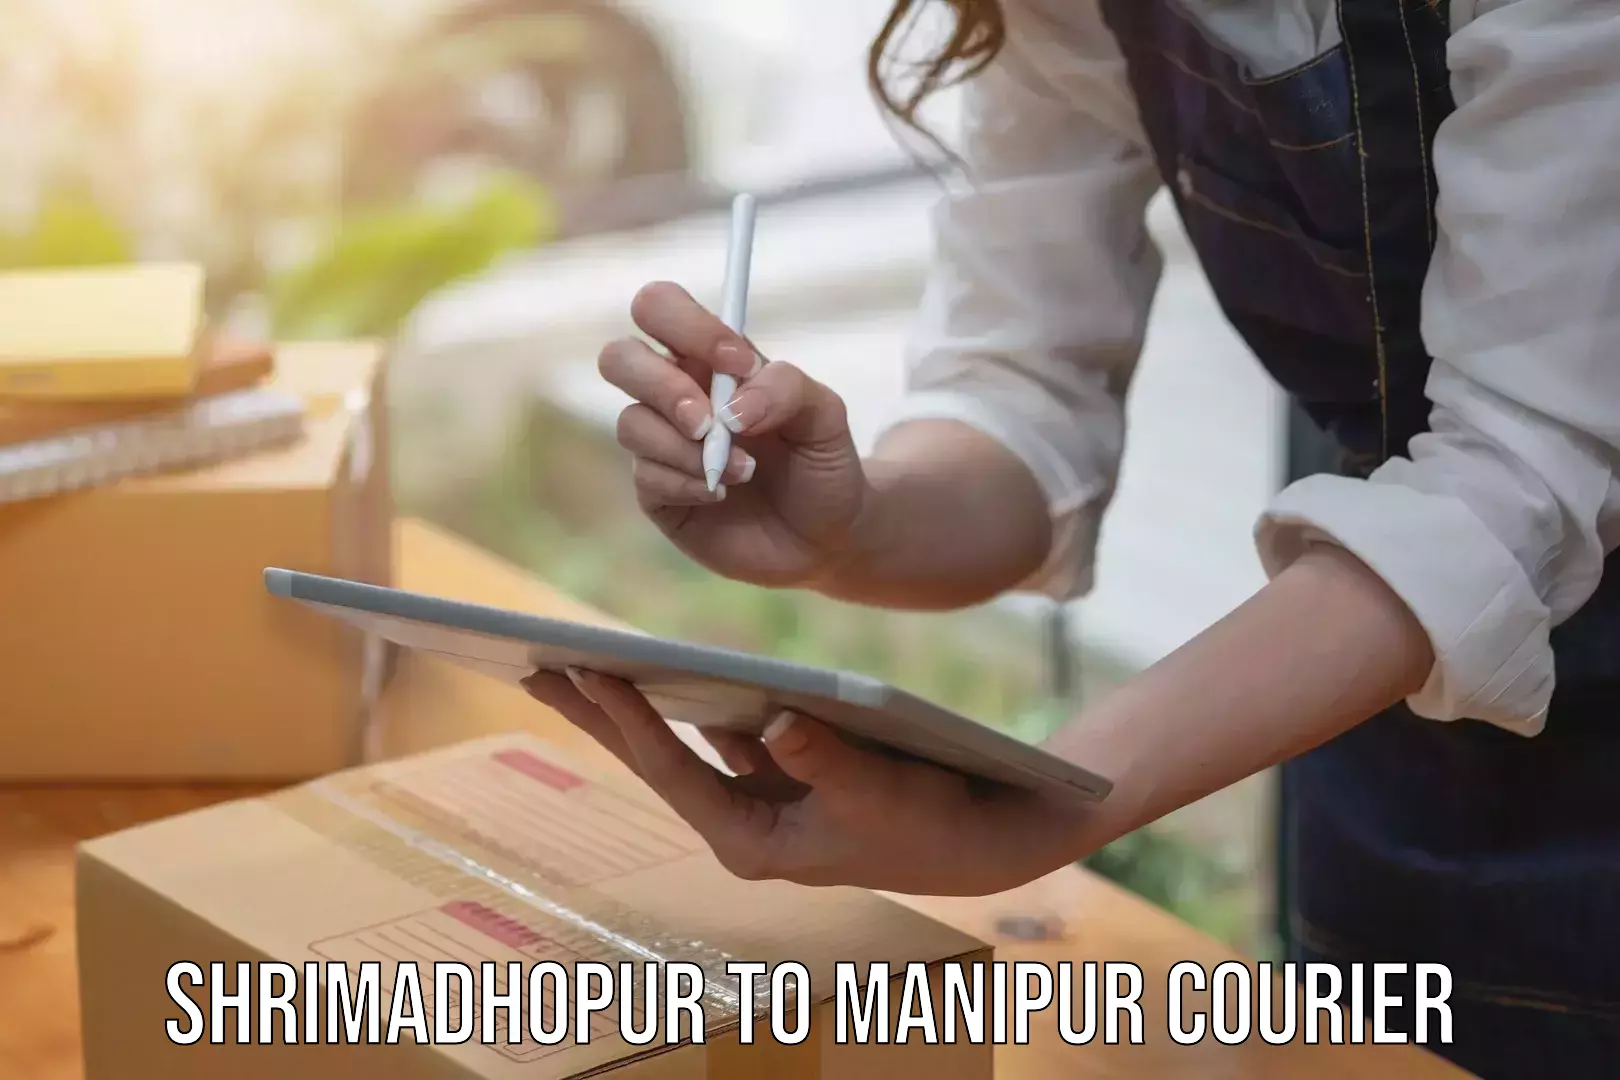 Professional courier handling Shrimadhopur to Churachandpur